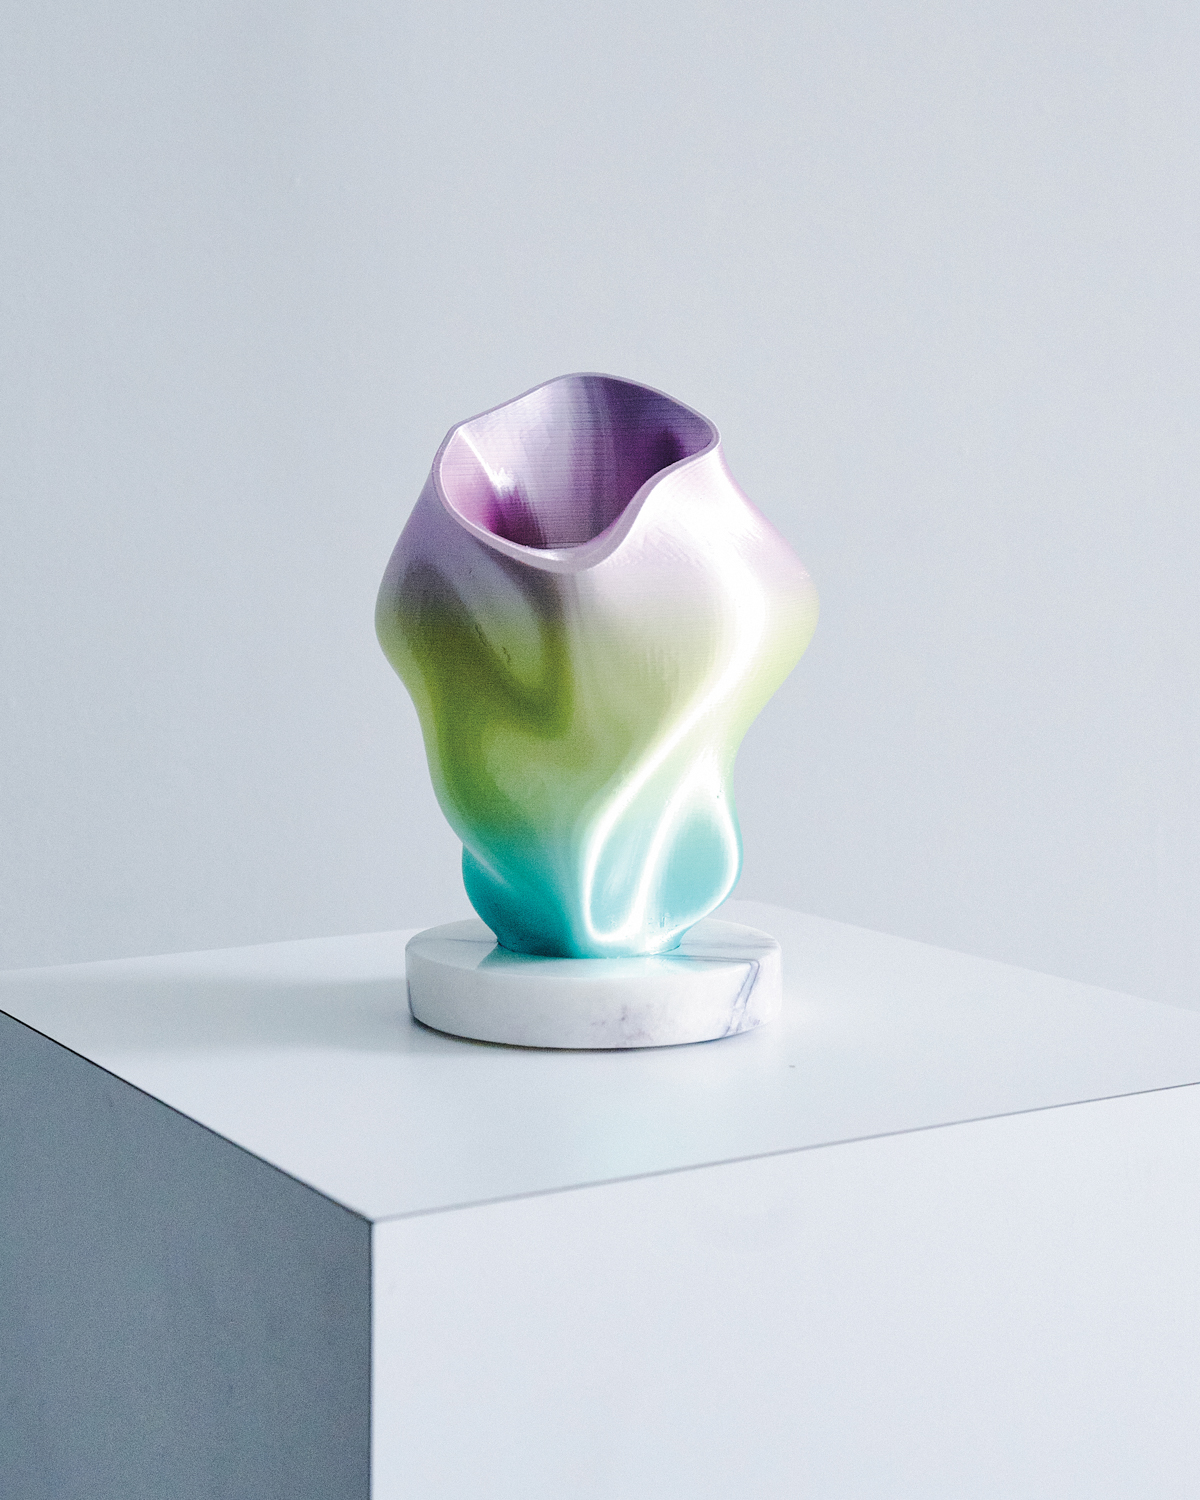 3D-printed Ether marble vase by Kickie Chudikova